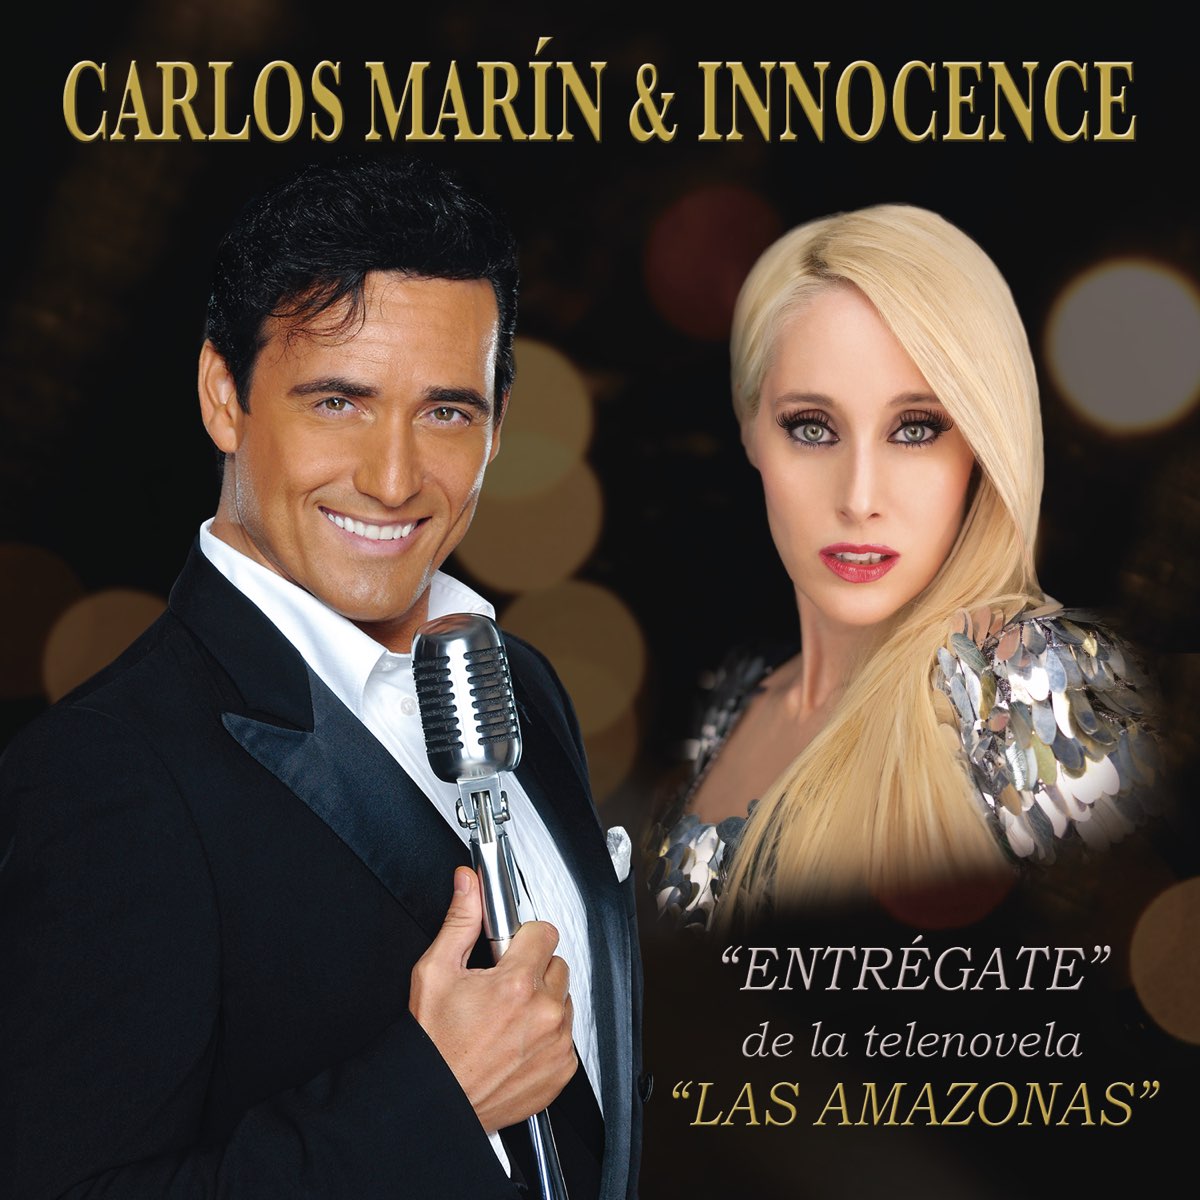 Entrégate (Tema de la Telenovela "Las Amazonas") [with Innocence] - Single  by Carlos Marin on Apple Music